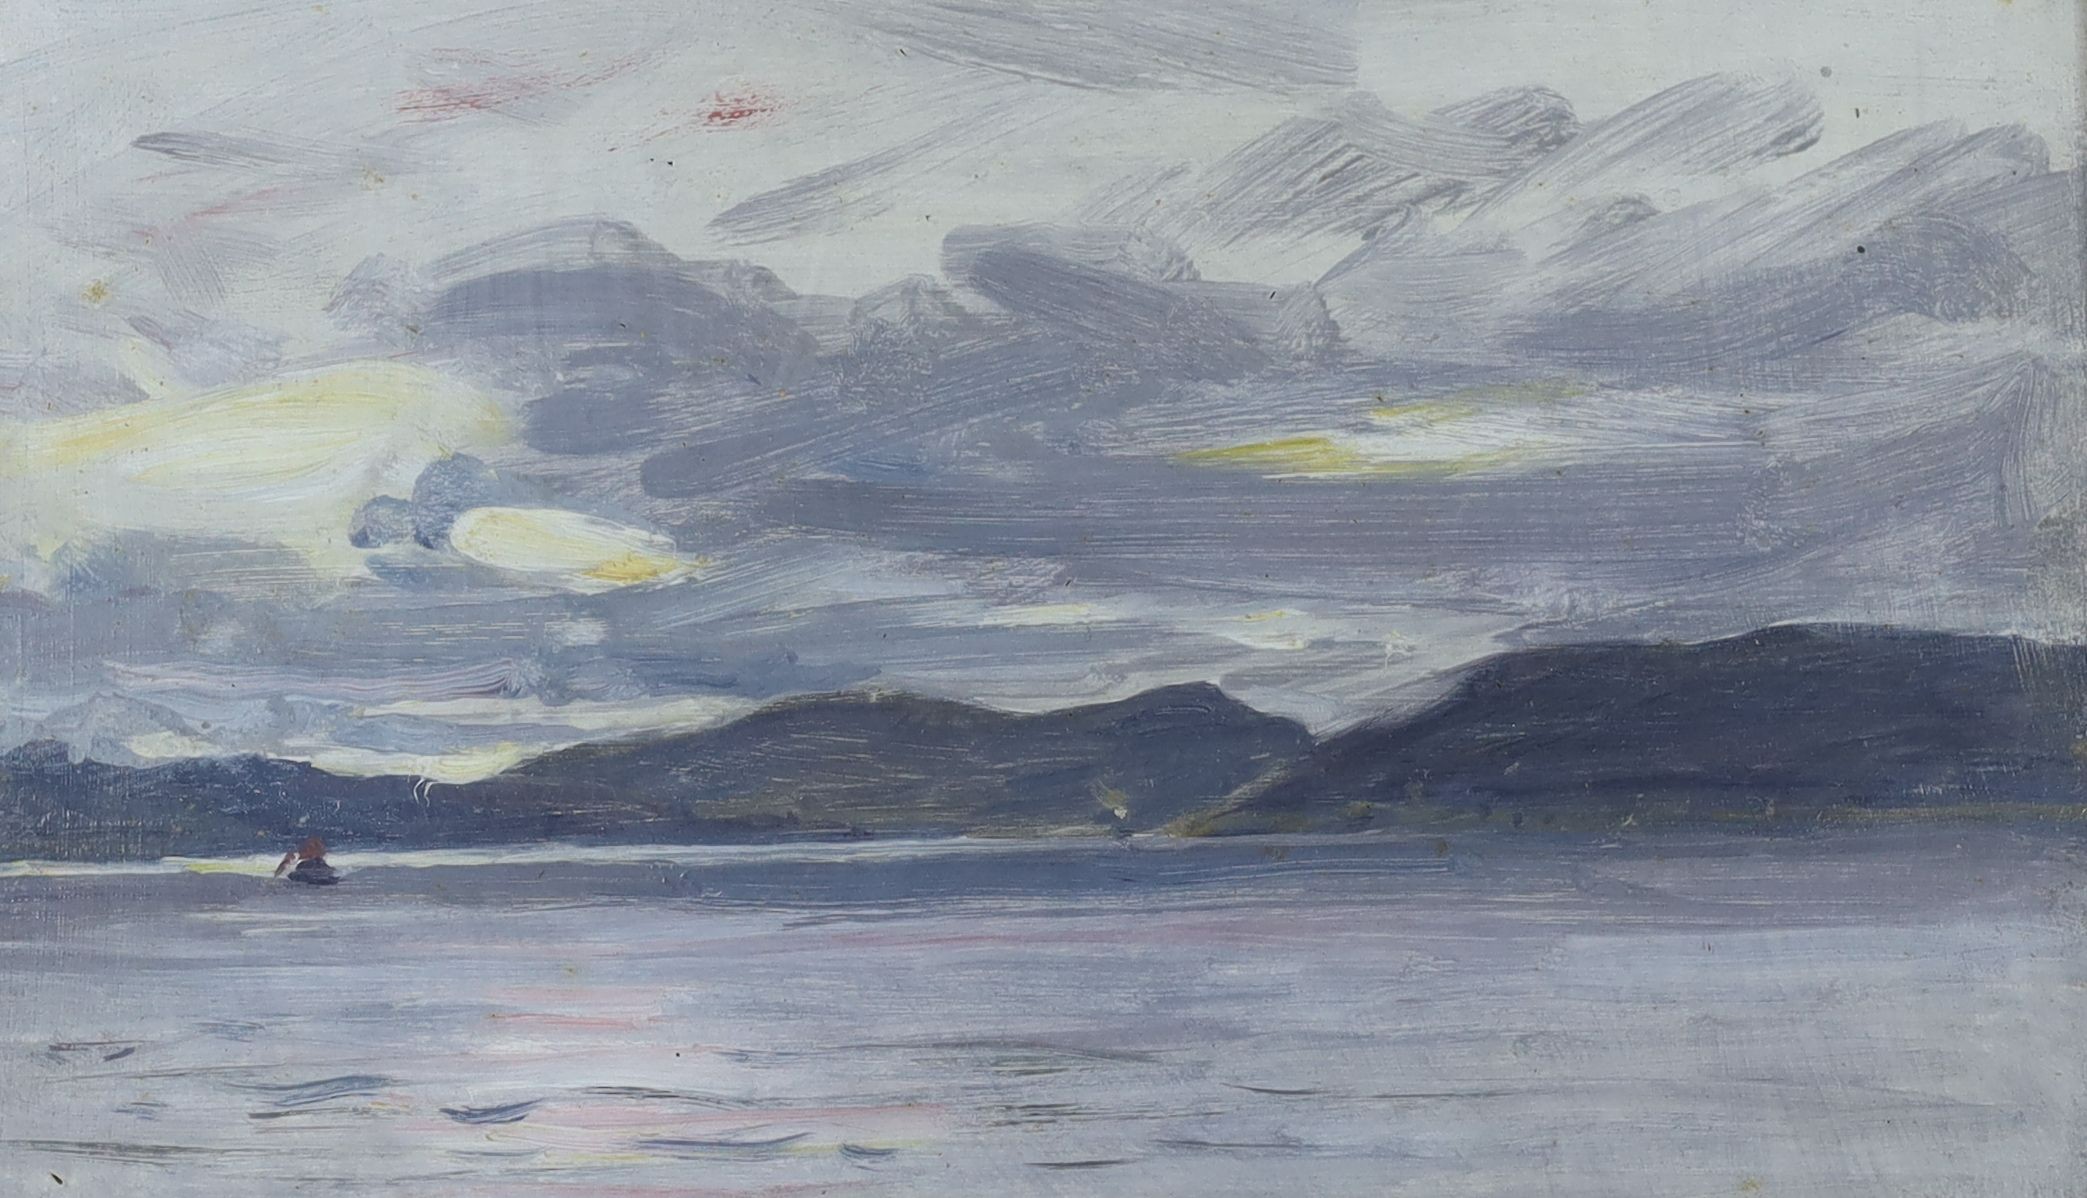 Hector Chalmers (1849-1943), oil on board, Scottish coastal landscape, signed, 16 x 28cm